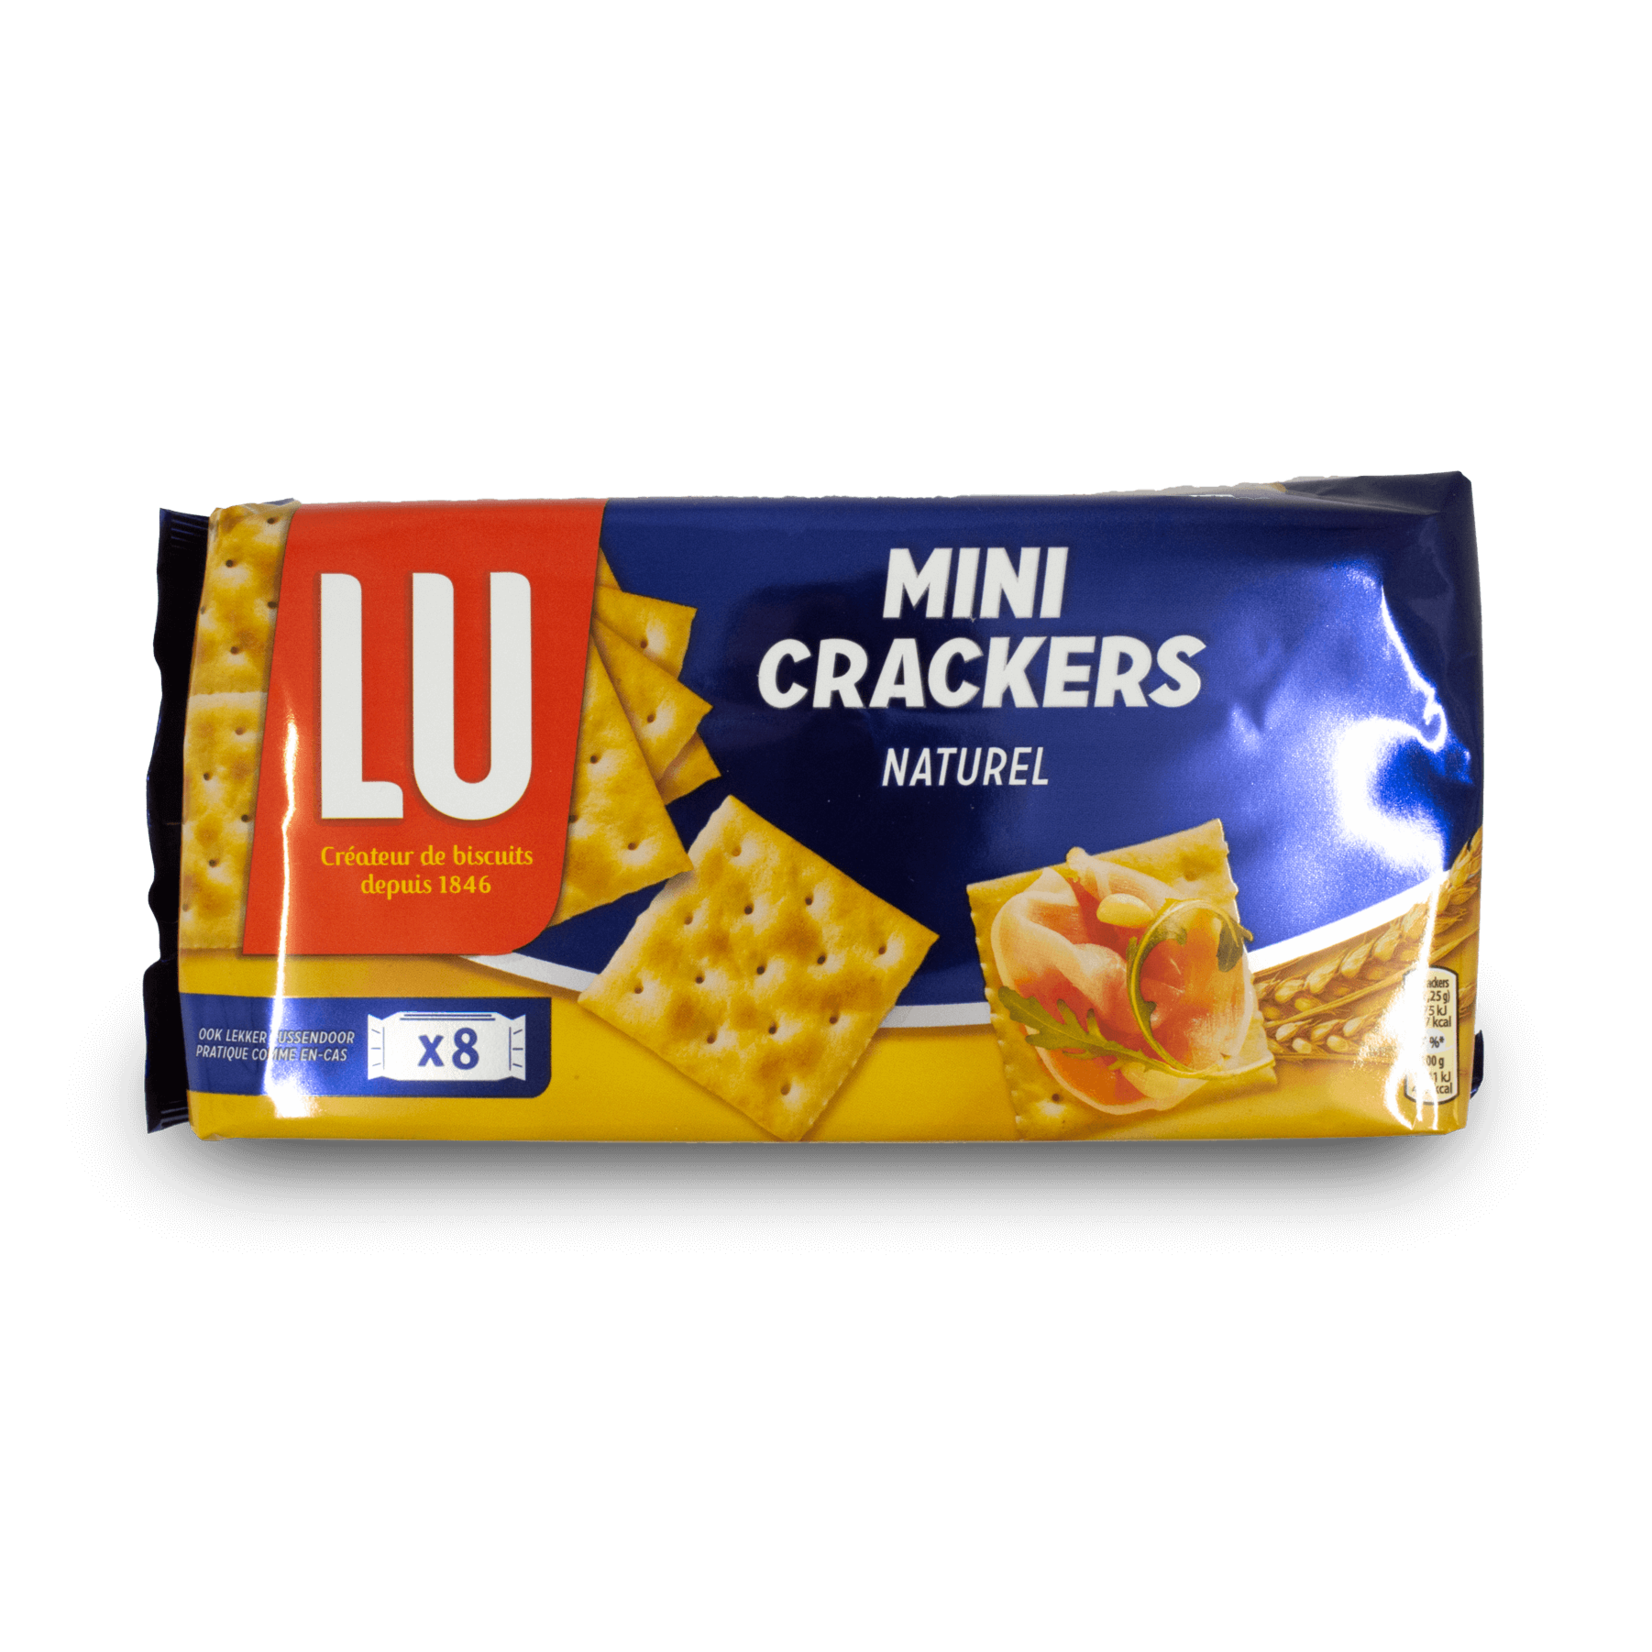 Lu Mini Crackers Natural 250g - The Dutch Shop